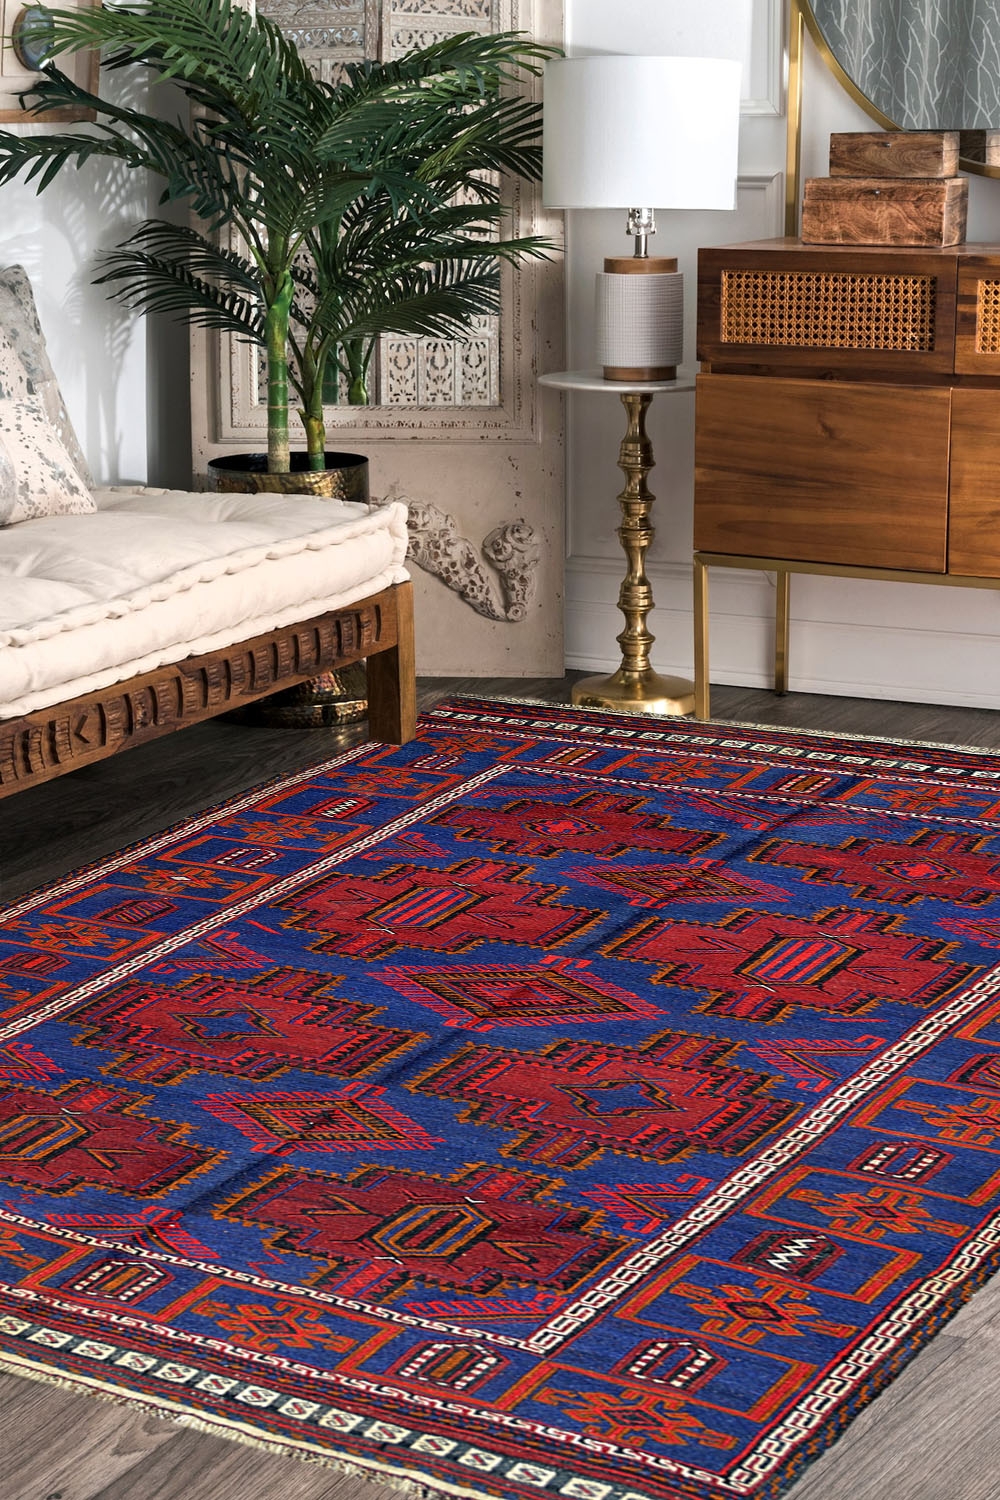 kilim rug,eclectic kilim rug,Turkish kilim rug 1'77x2'06-54x63cm,Homedecor tribal Kilim rug,handmade throw kilim rug,vintage kilim rug